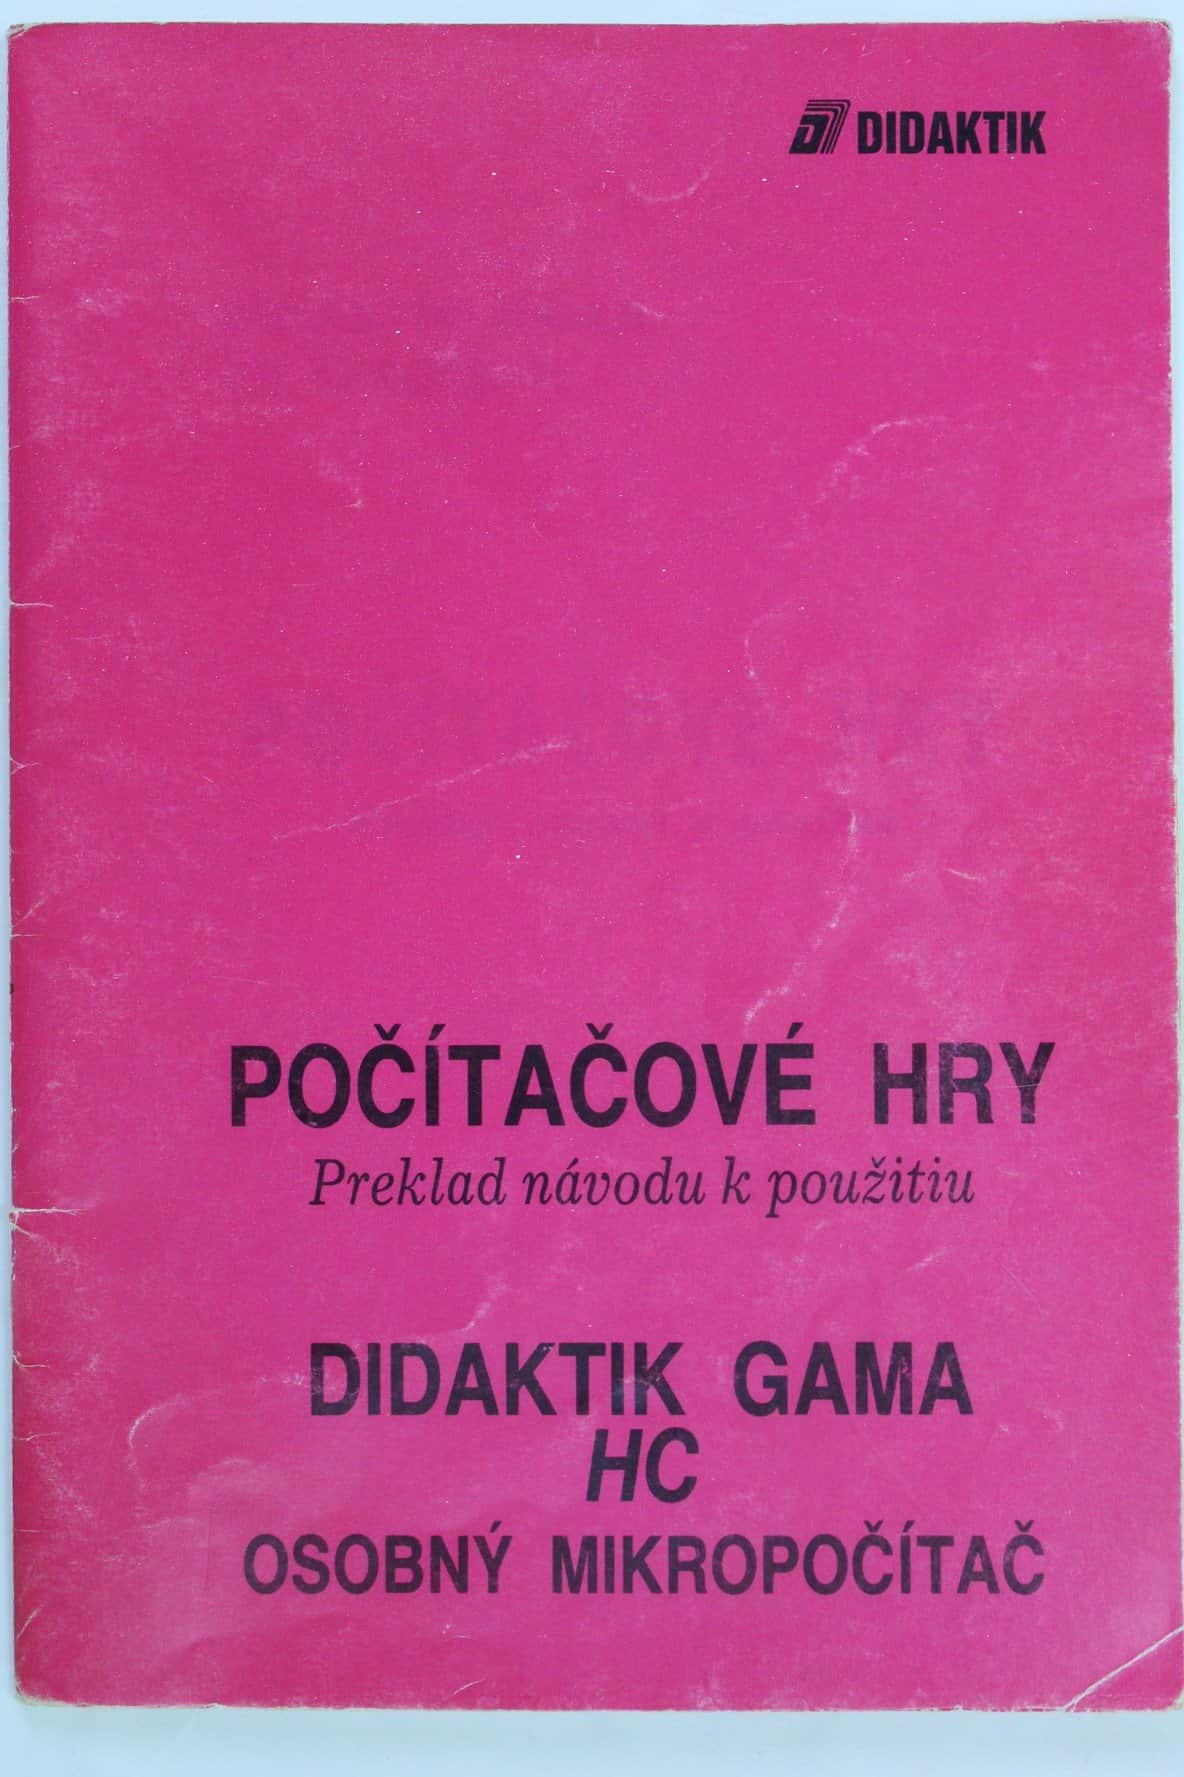 Pocitacove-hry-Didaktik-Gama-Strana01